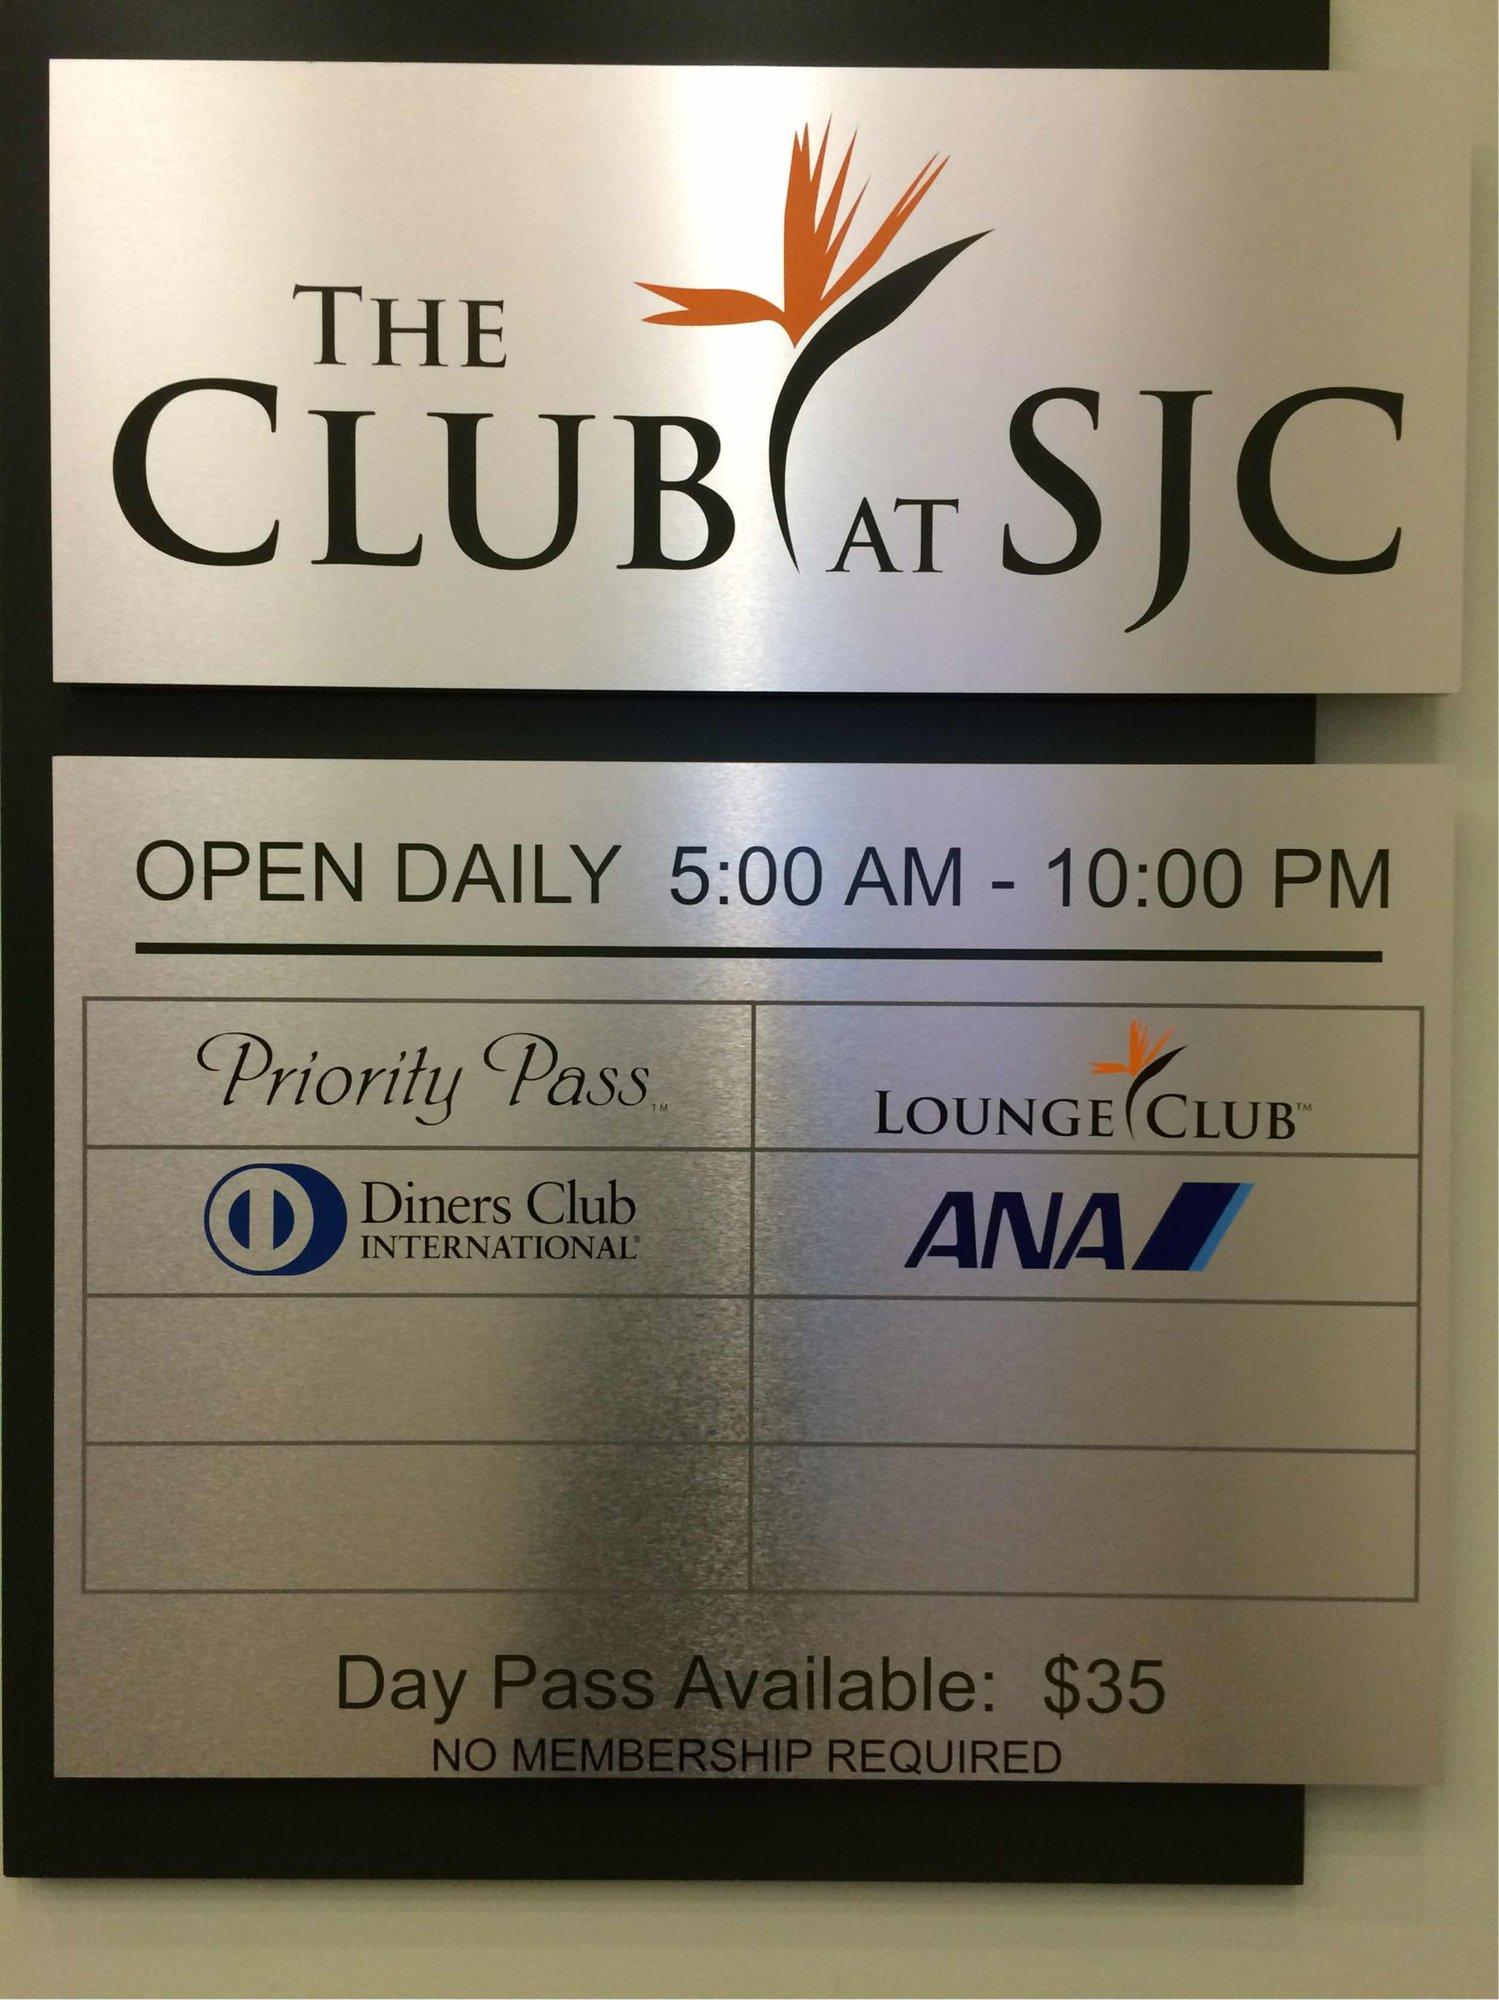 The Club SJC (Gate A15) image 26 of 33